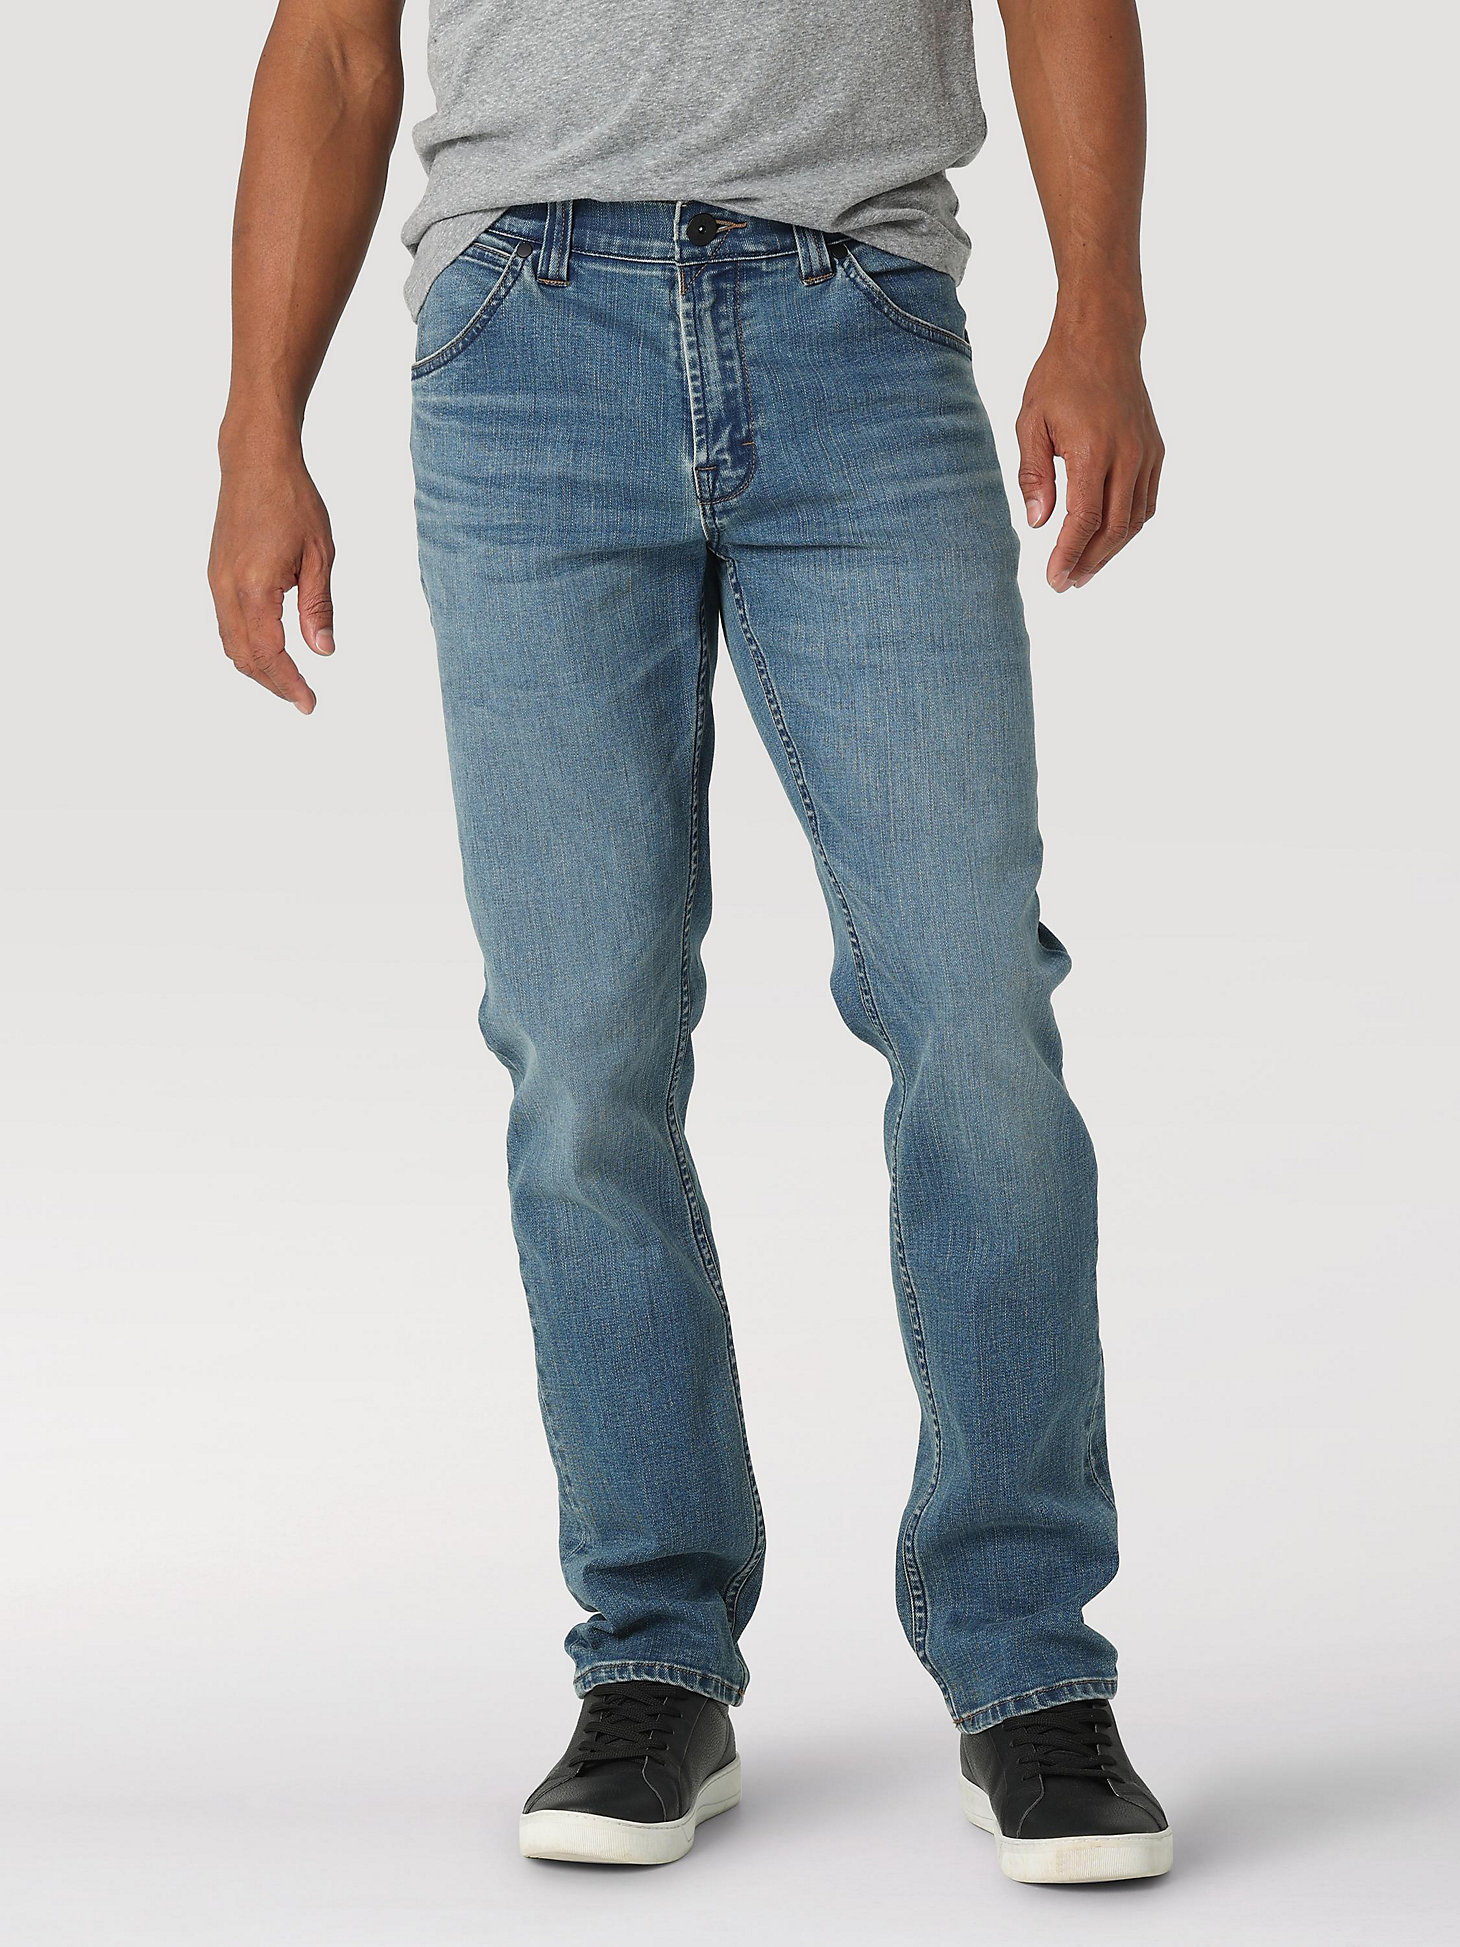 Men's Ultra Flex Slim Fit Jean in Jett main view